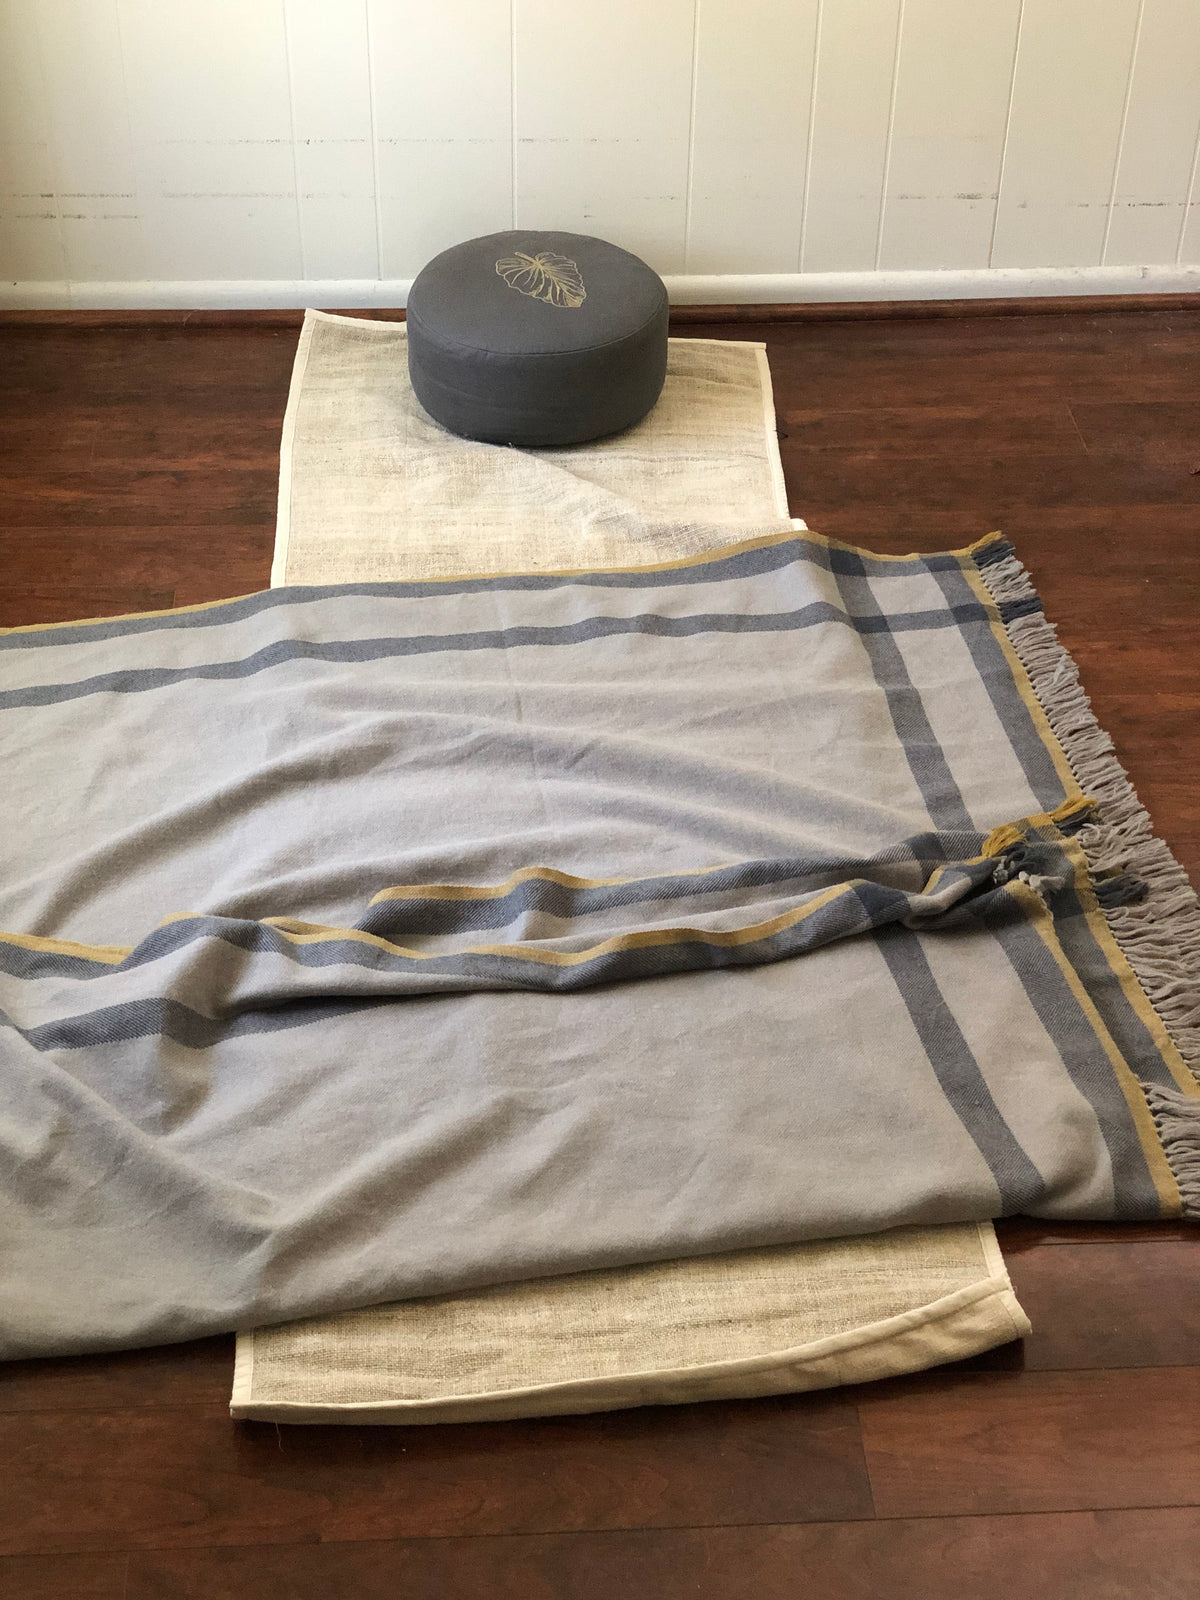 The Practitioner's Bundle: 100% Wool Meditation Shawl, Natural Hemp Yoga Mat and Meditation Cushion